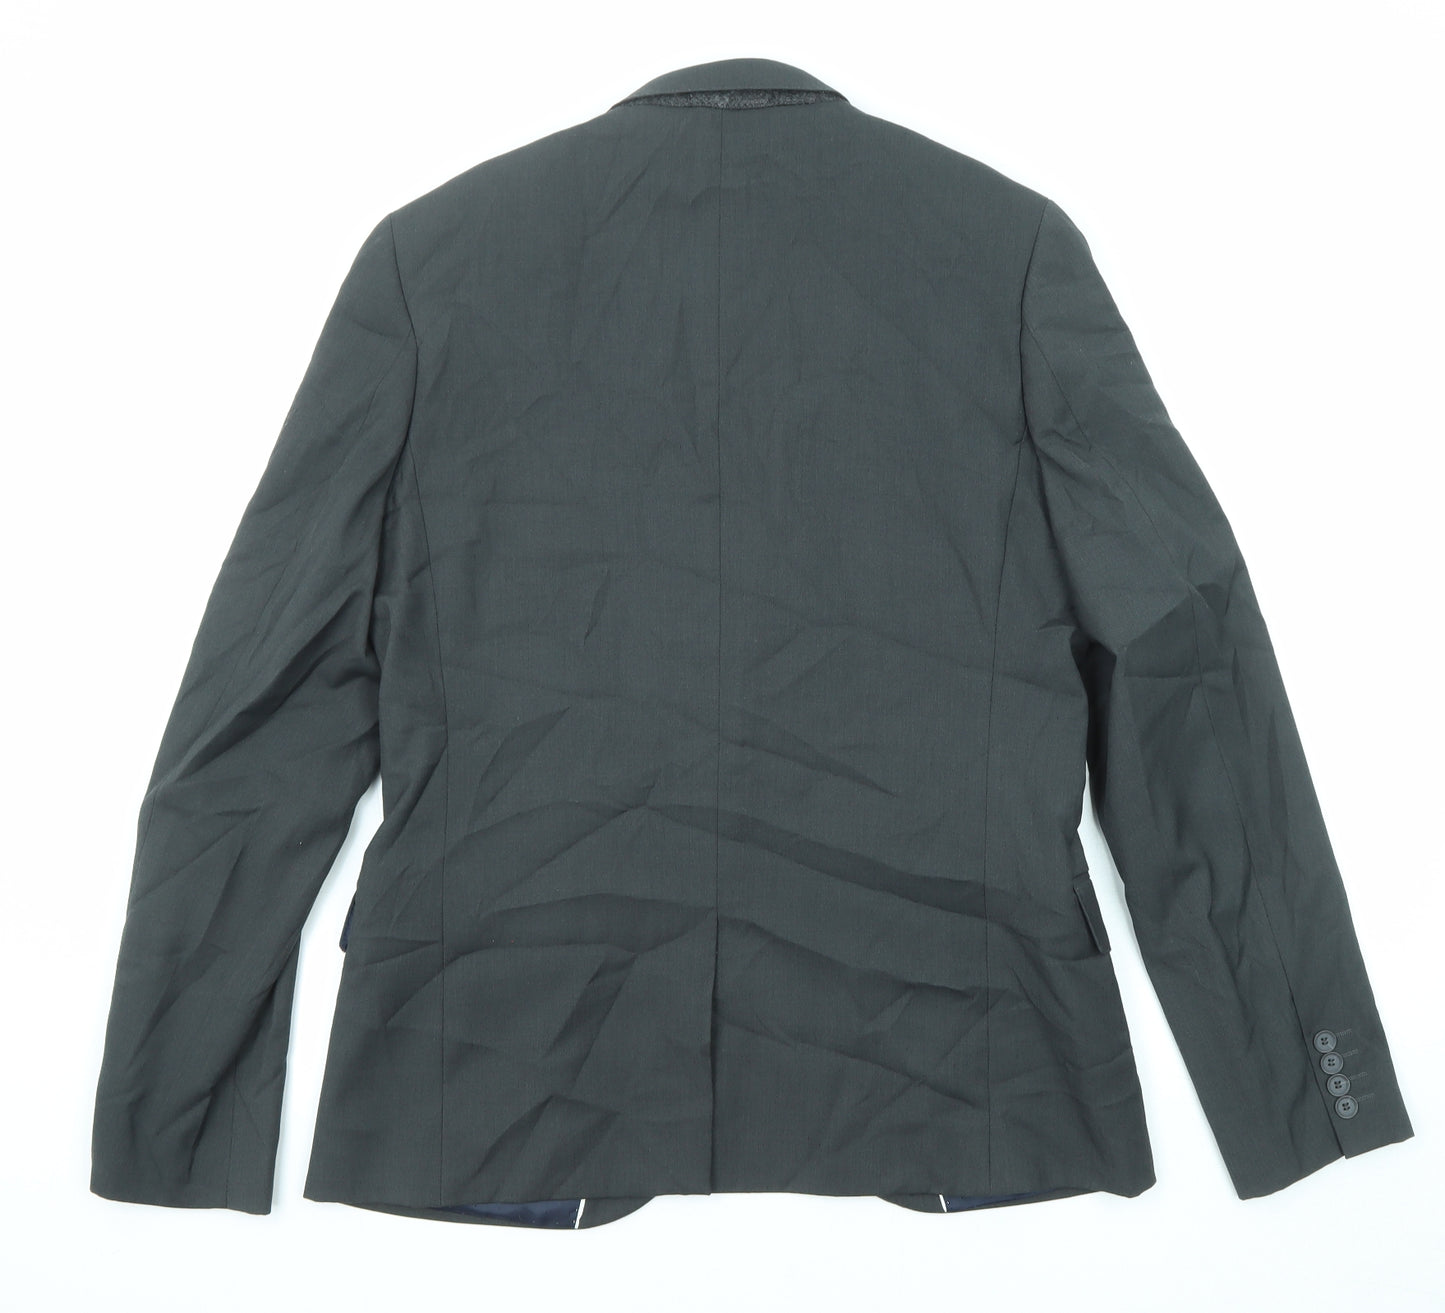 Topman Mens Grey Polyester Jacket Suit Jacket Size 40 Regular